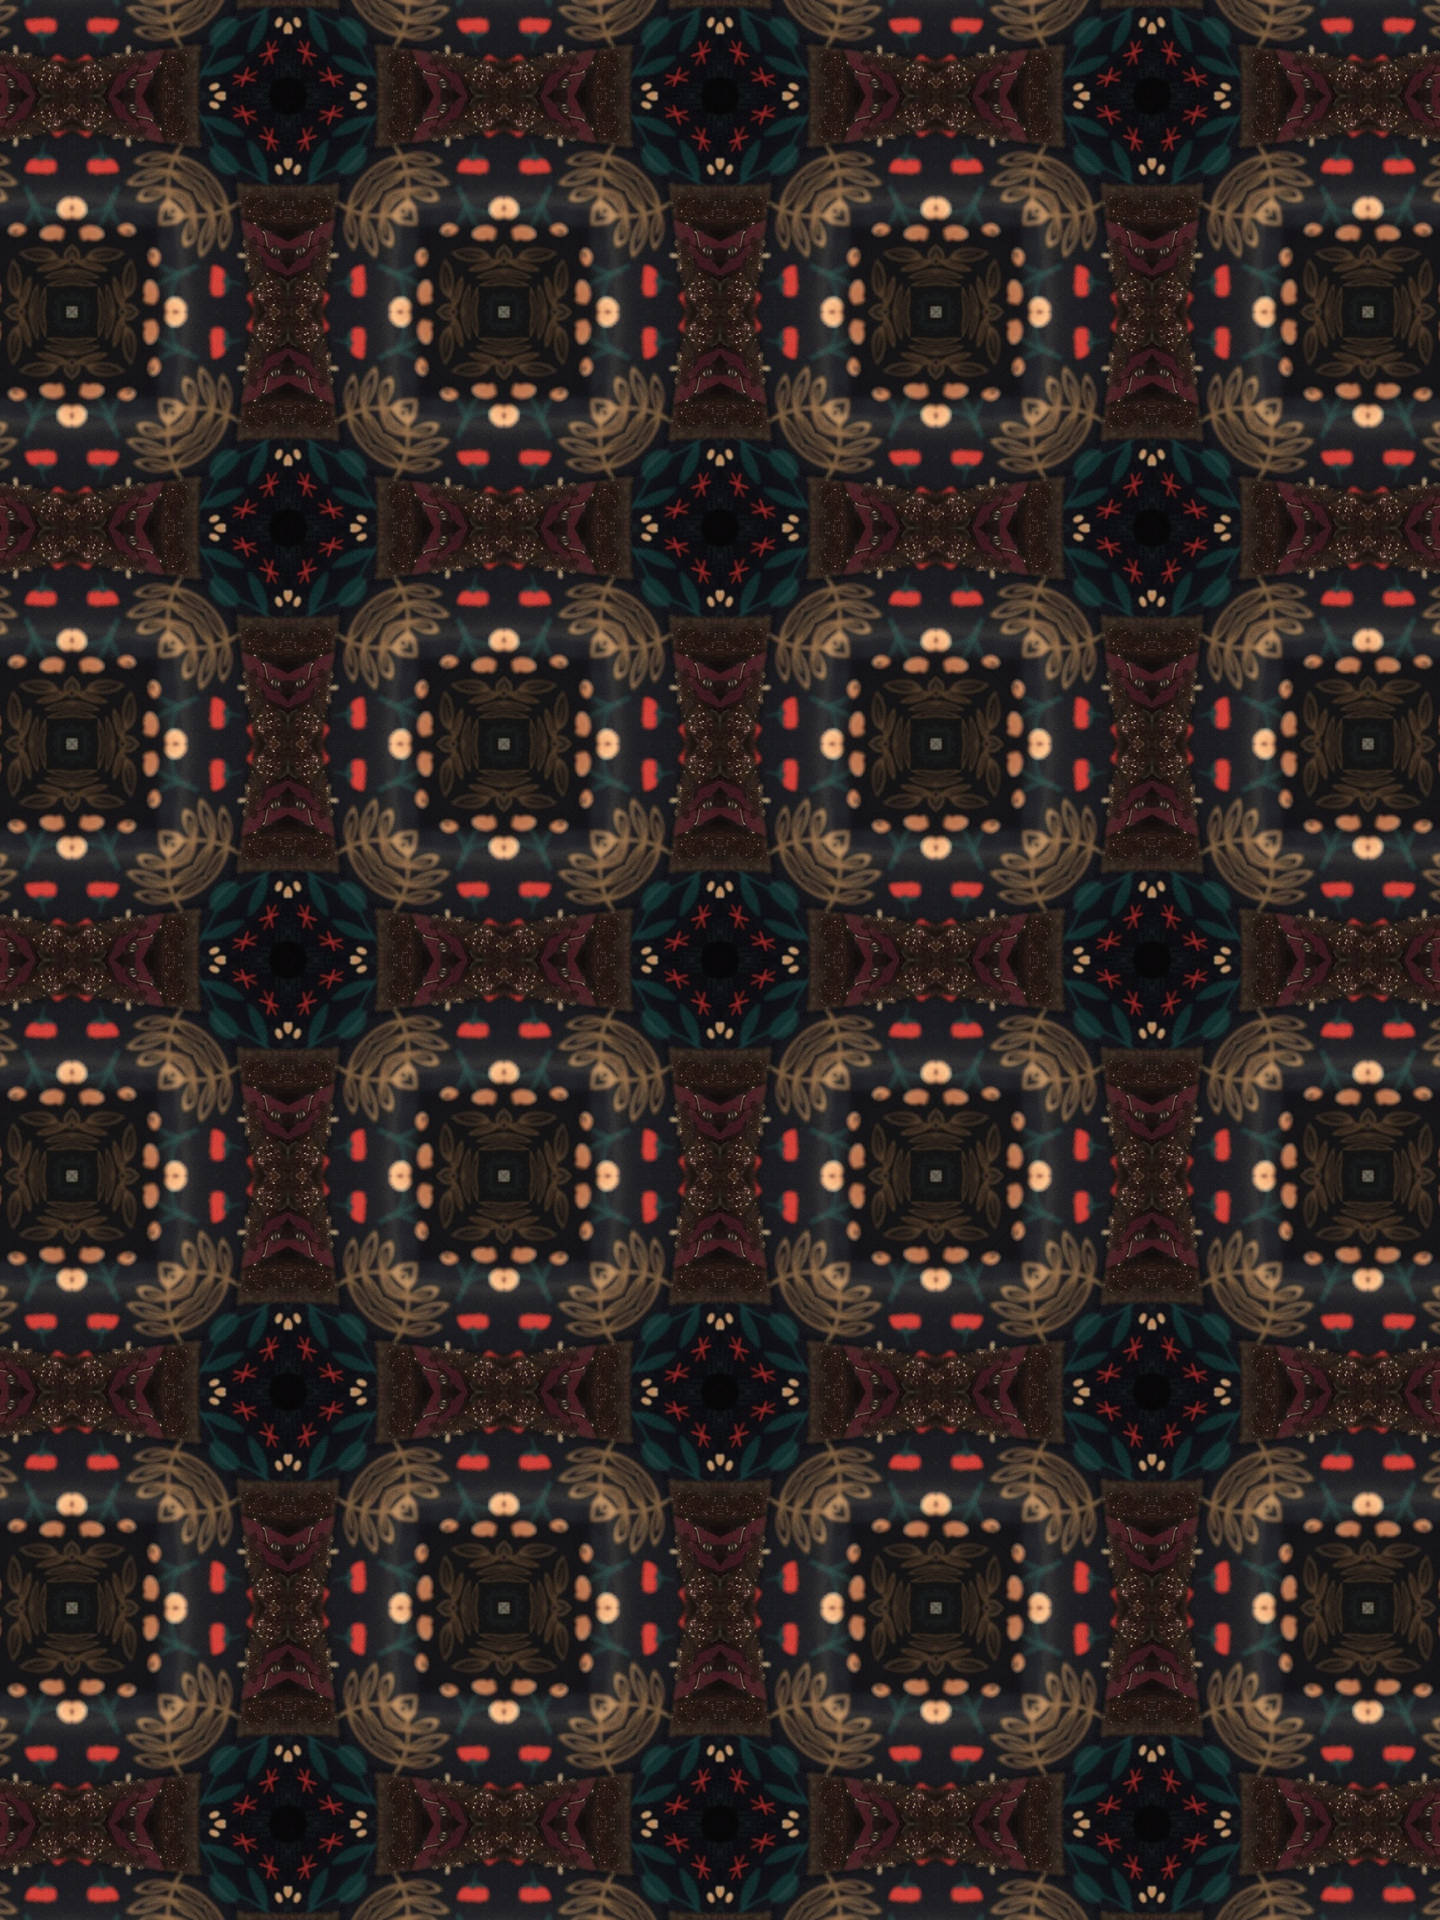 Pattern 2448X3264 wallpaper